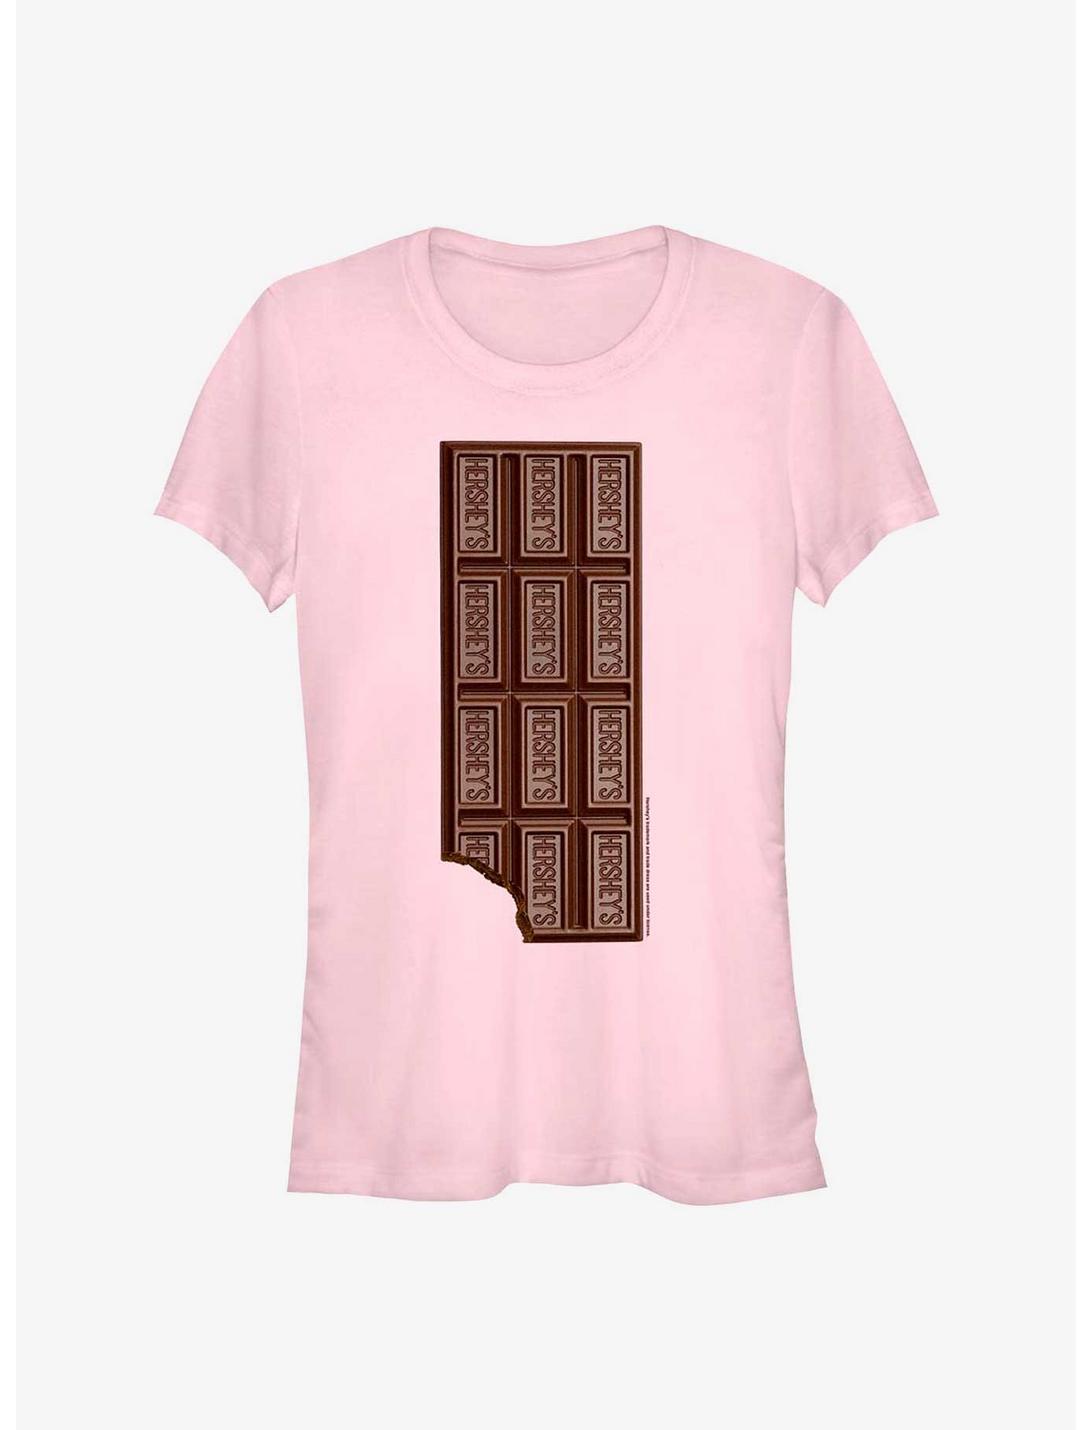 Hershey's Chocolate Bar Bite Girls T-Shirt, LIGHT PINK, hi-res